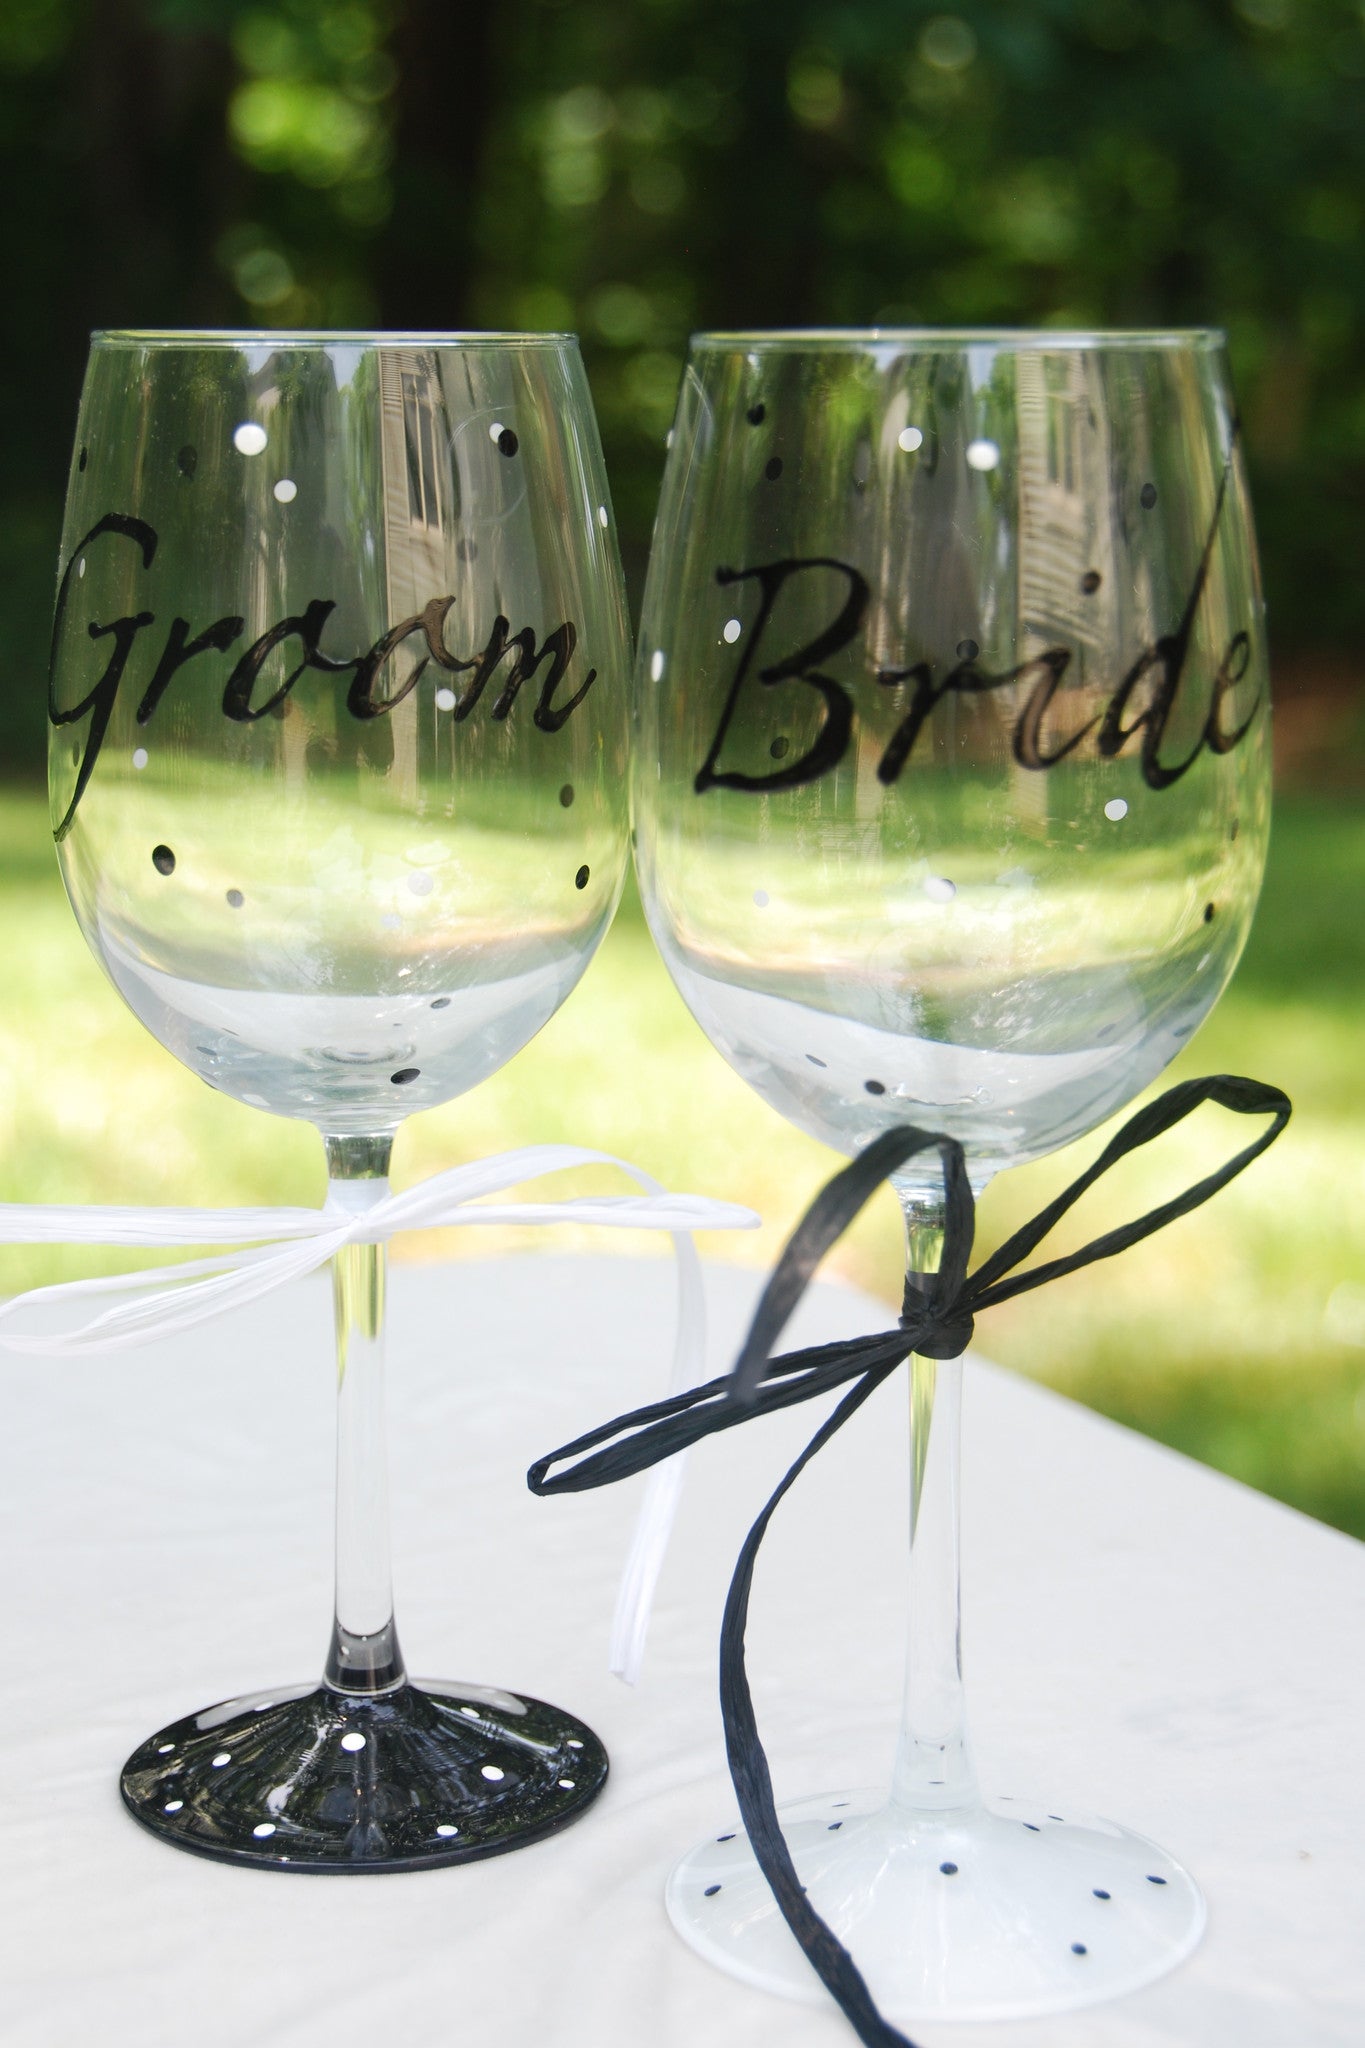 Mr. & Mrs. Hand Painted Wine Glasses